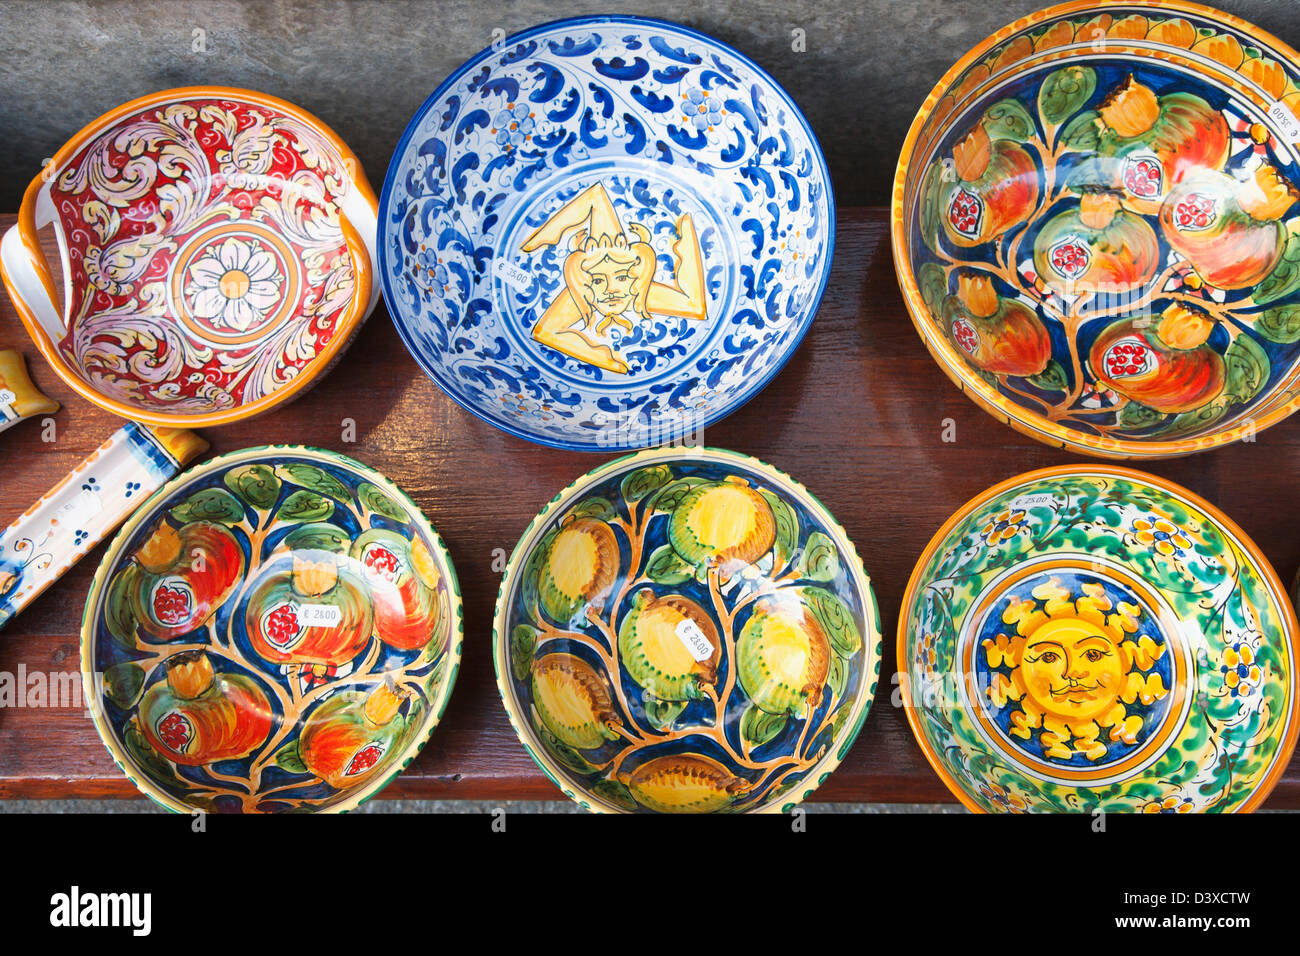 Anzeige der Keramik Geschirr, Taormina, Provinz Messina, Sizilien, Italien  Stockfotografie - Alamy